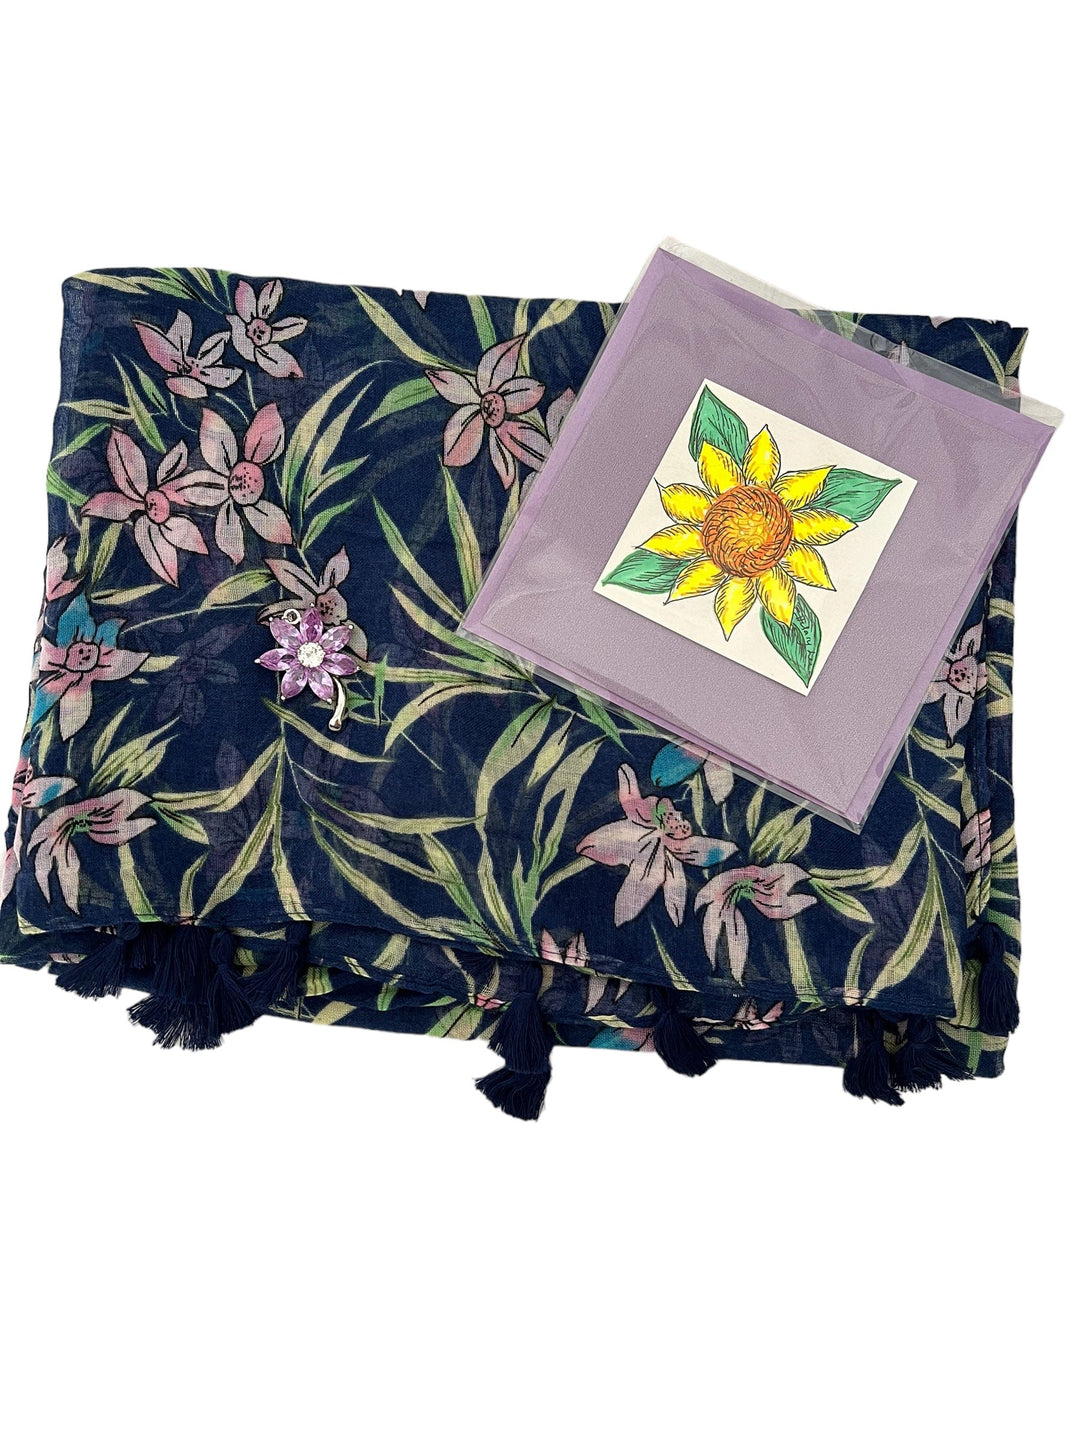 Scarves Australia Gift Packs Floral Scarf Navy w Tassels +Lilac Flower Brooch + Card